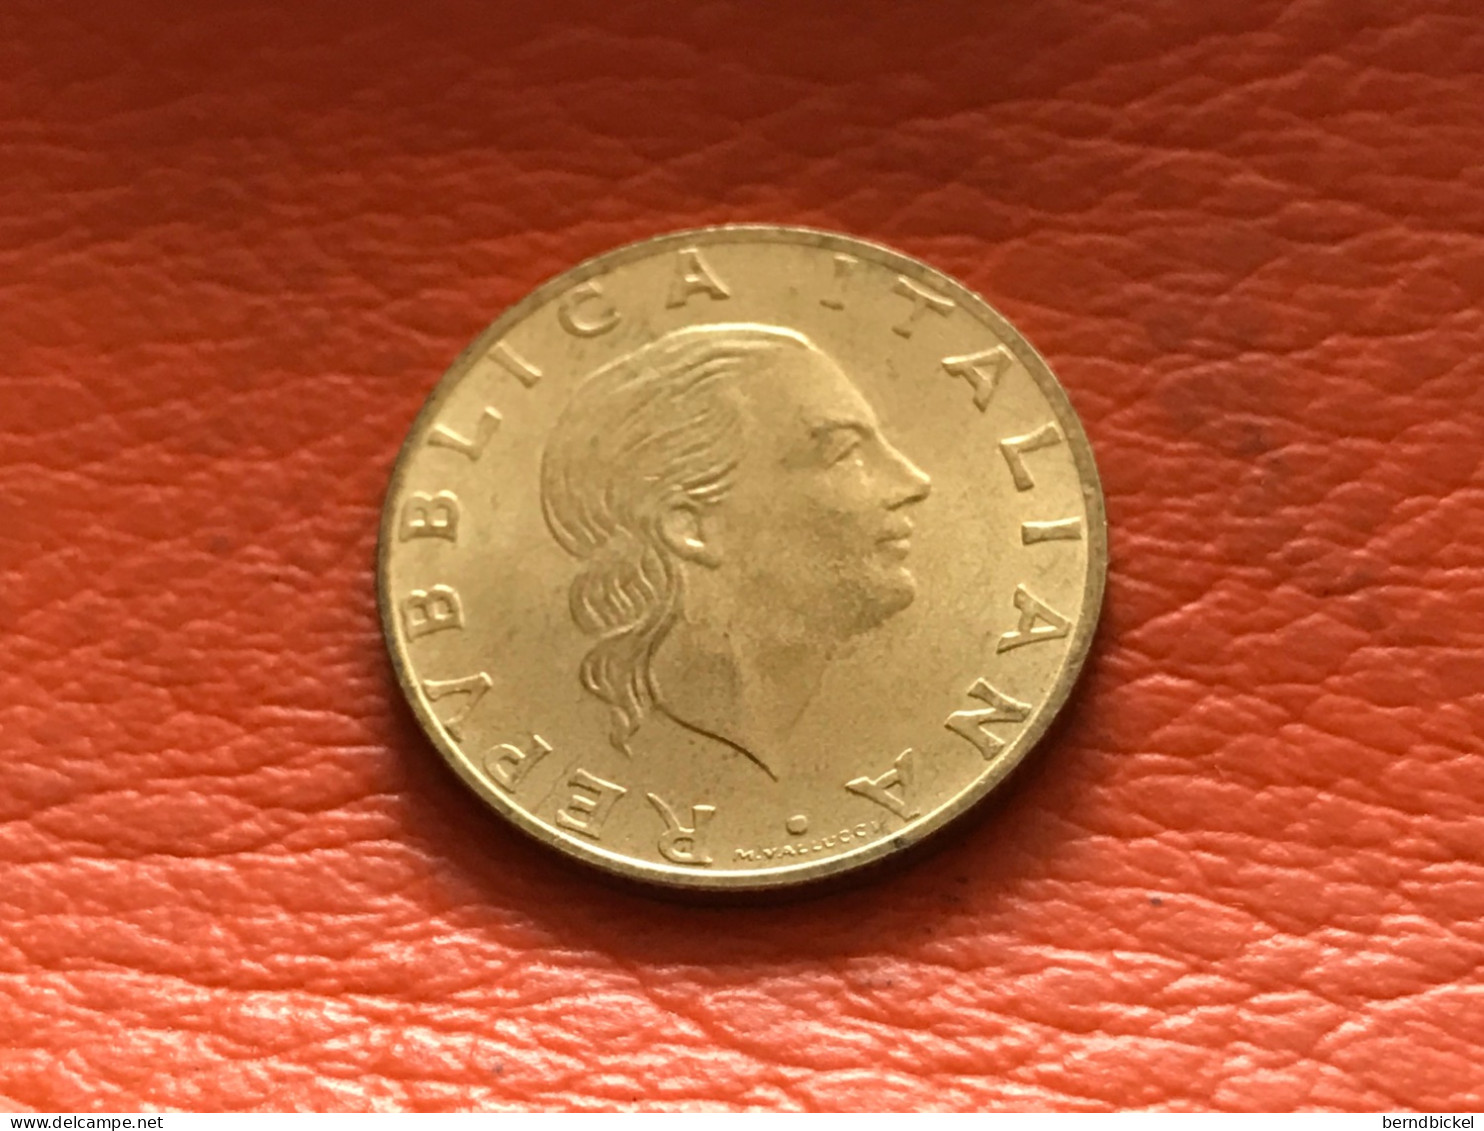 Münze Münzen Umlaufmünze Gedenkmünze Italien 100 Lire 1989 Tarent - Commémoratives